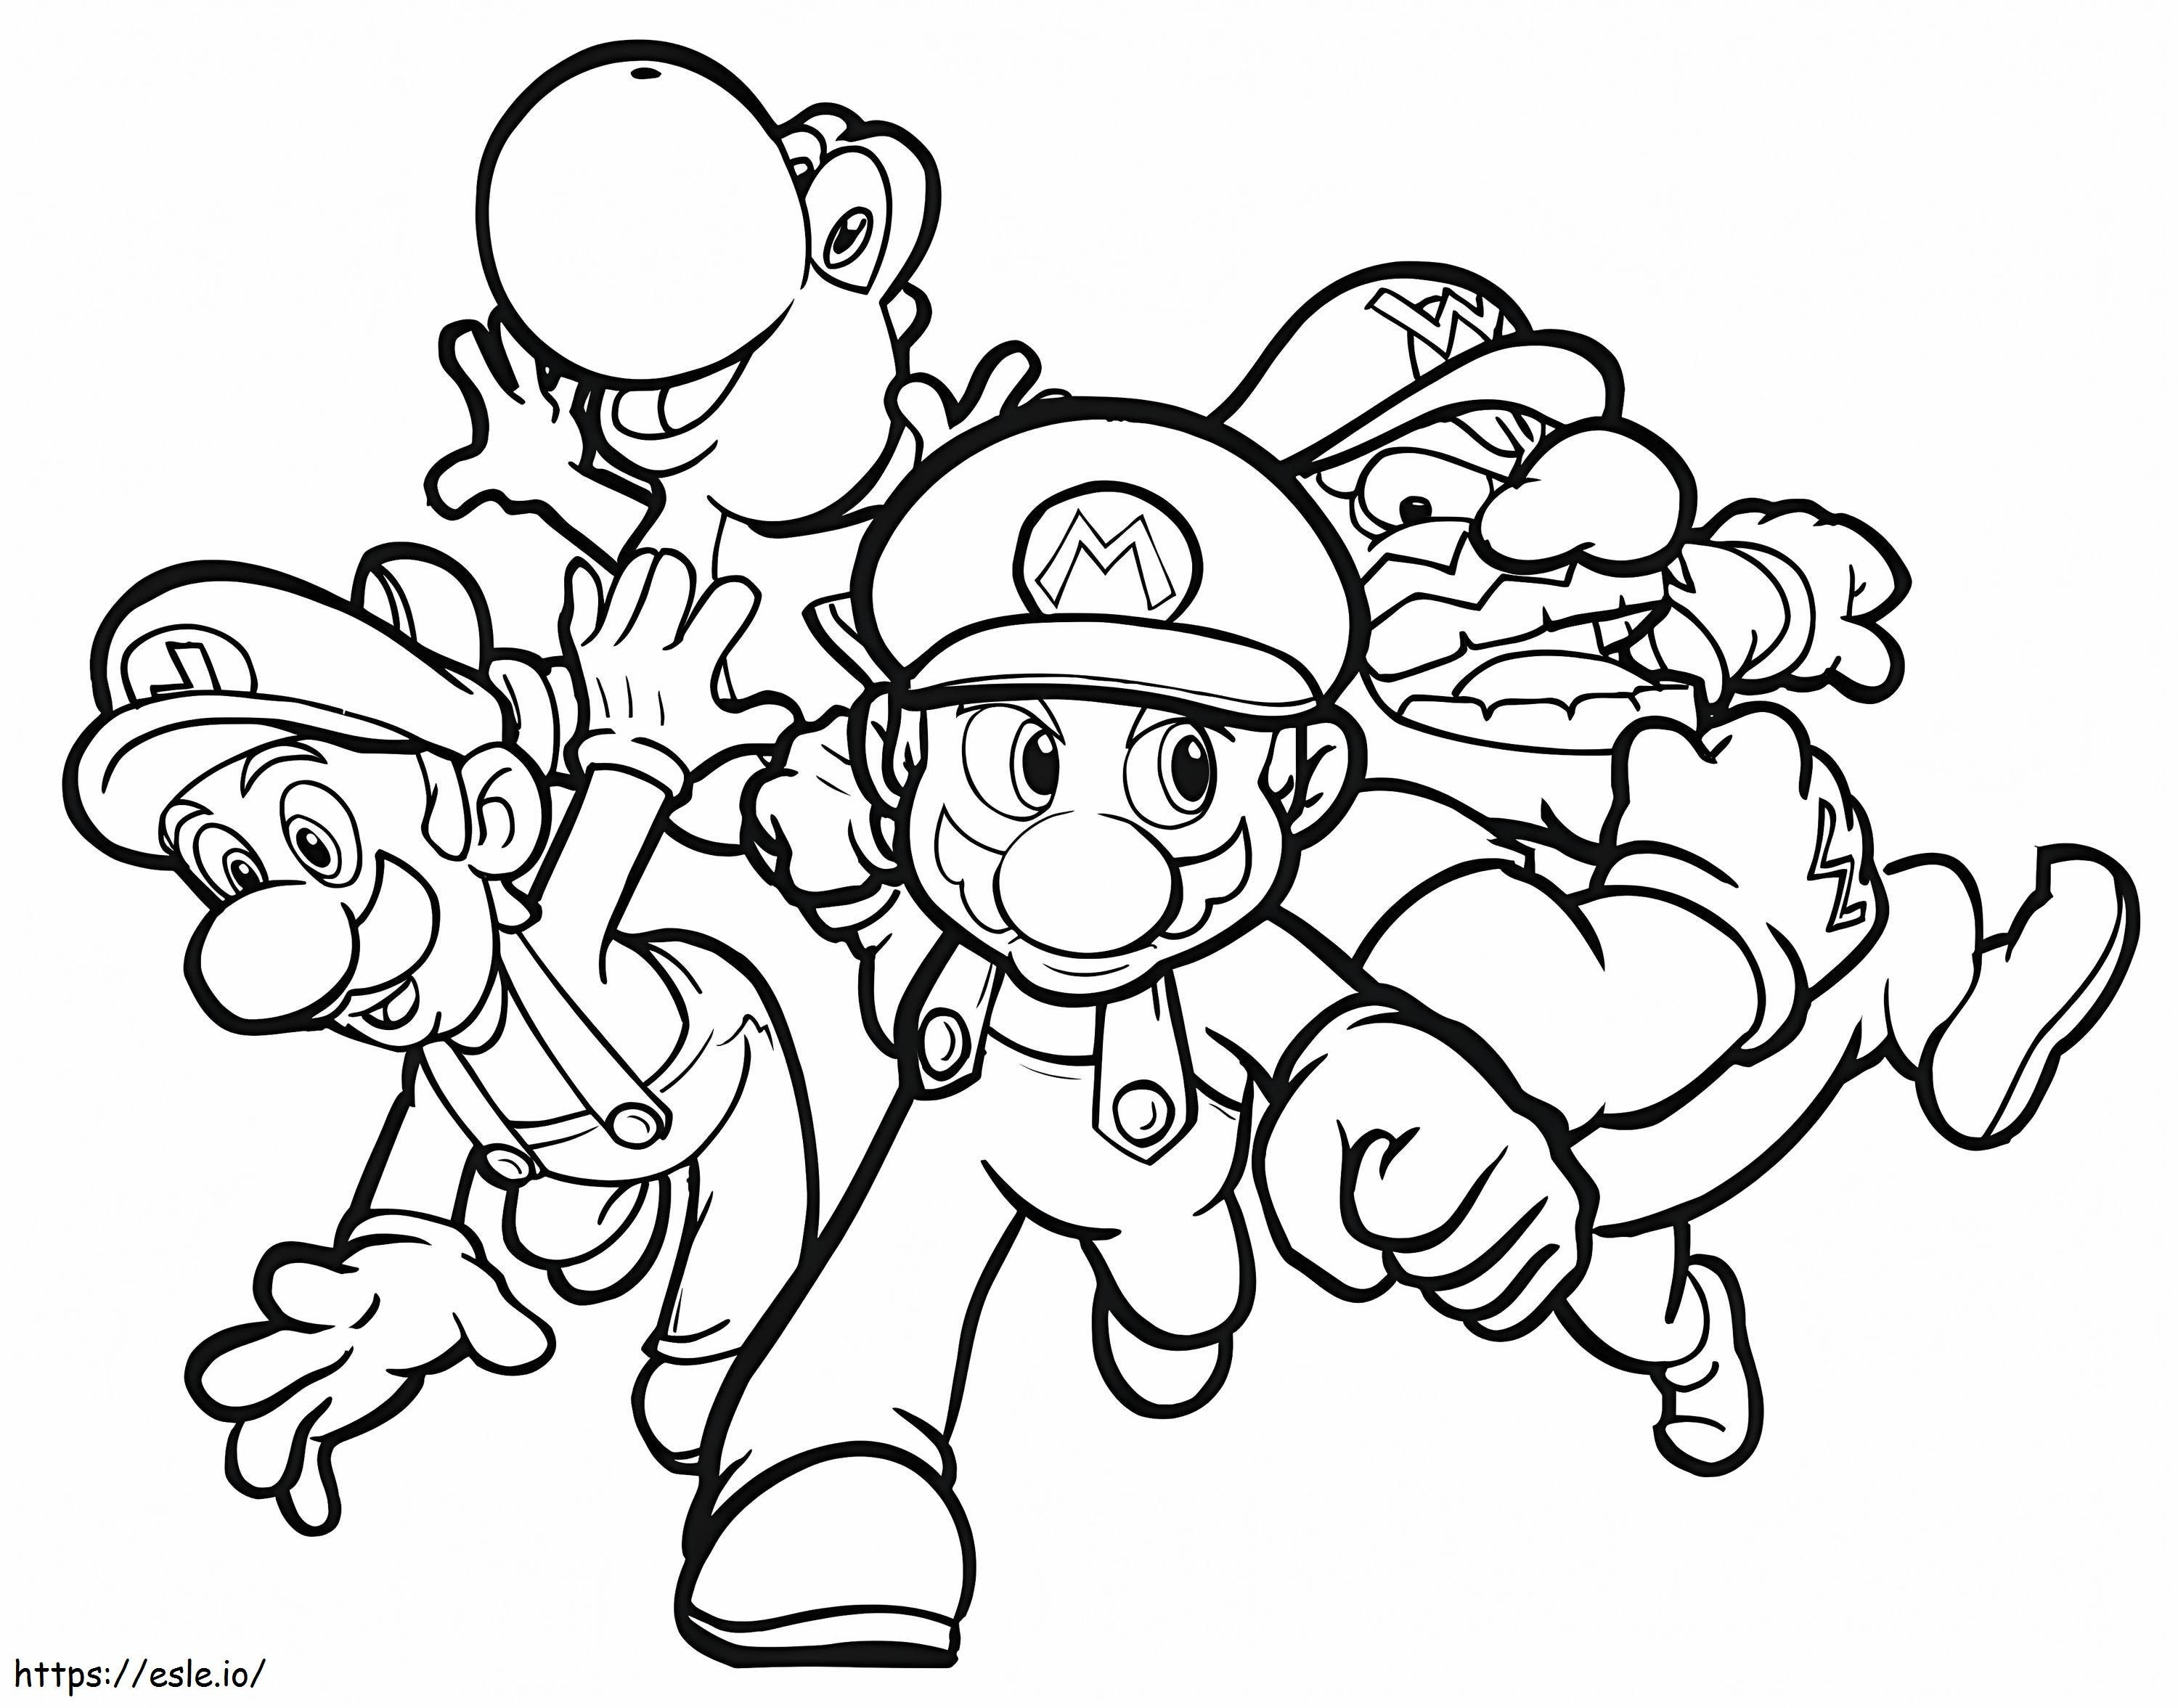 Charaktere aus Mario 1 ausmalbilder